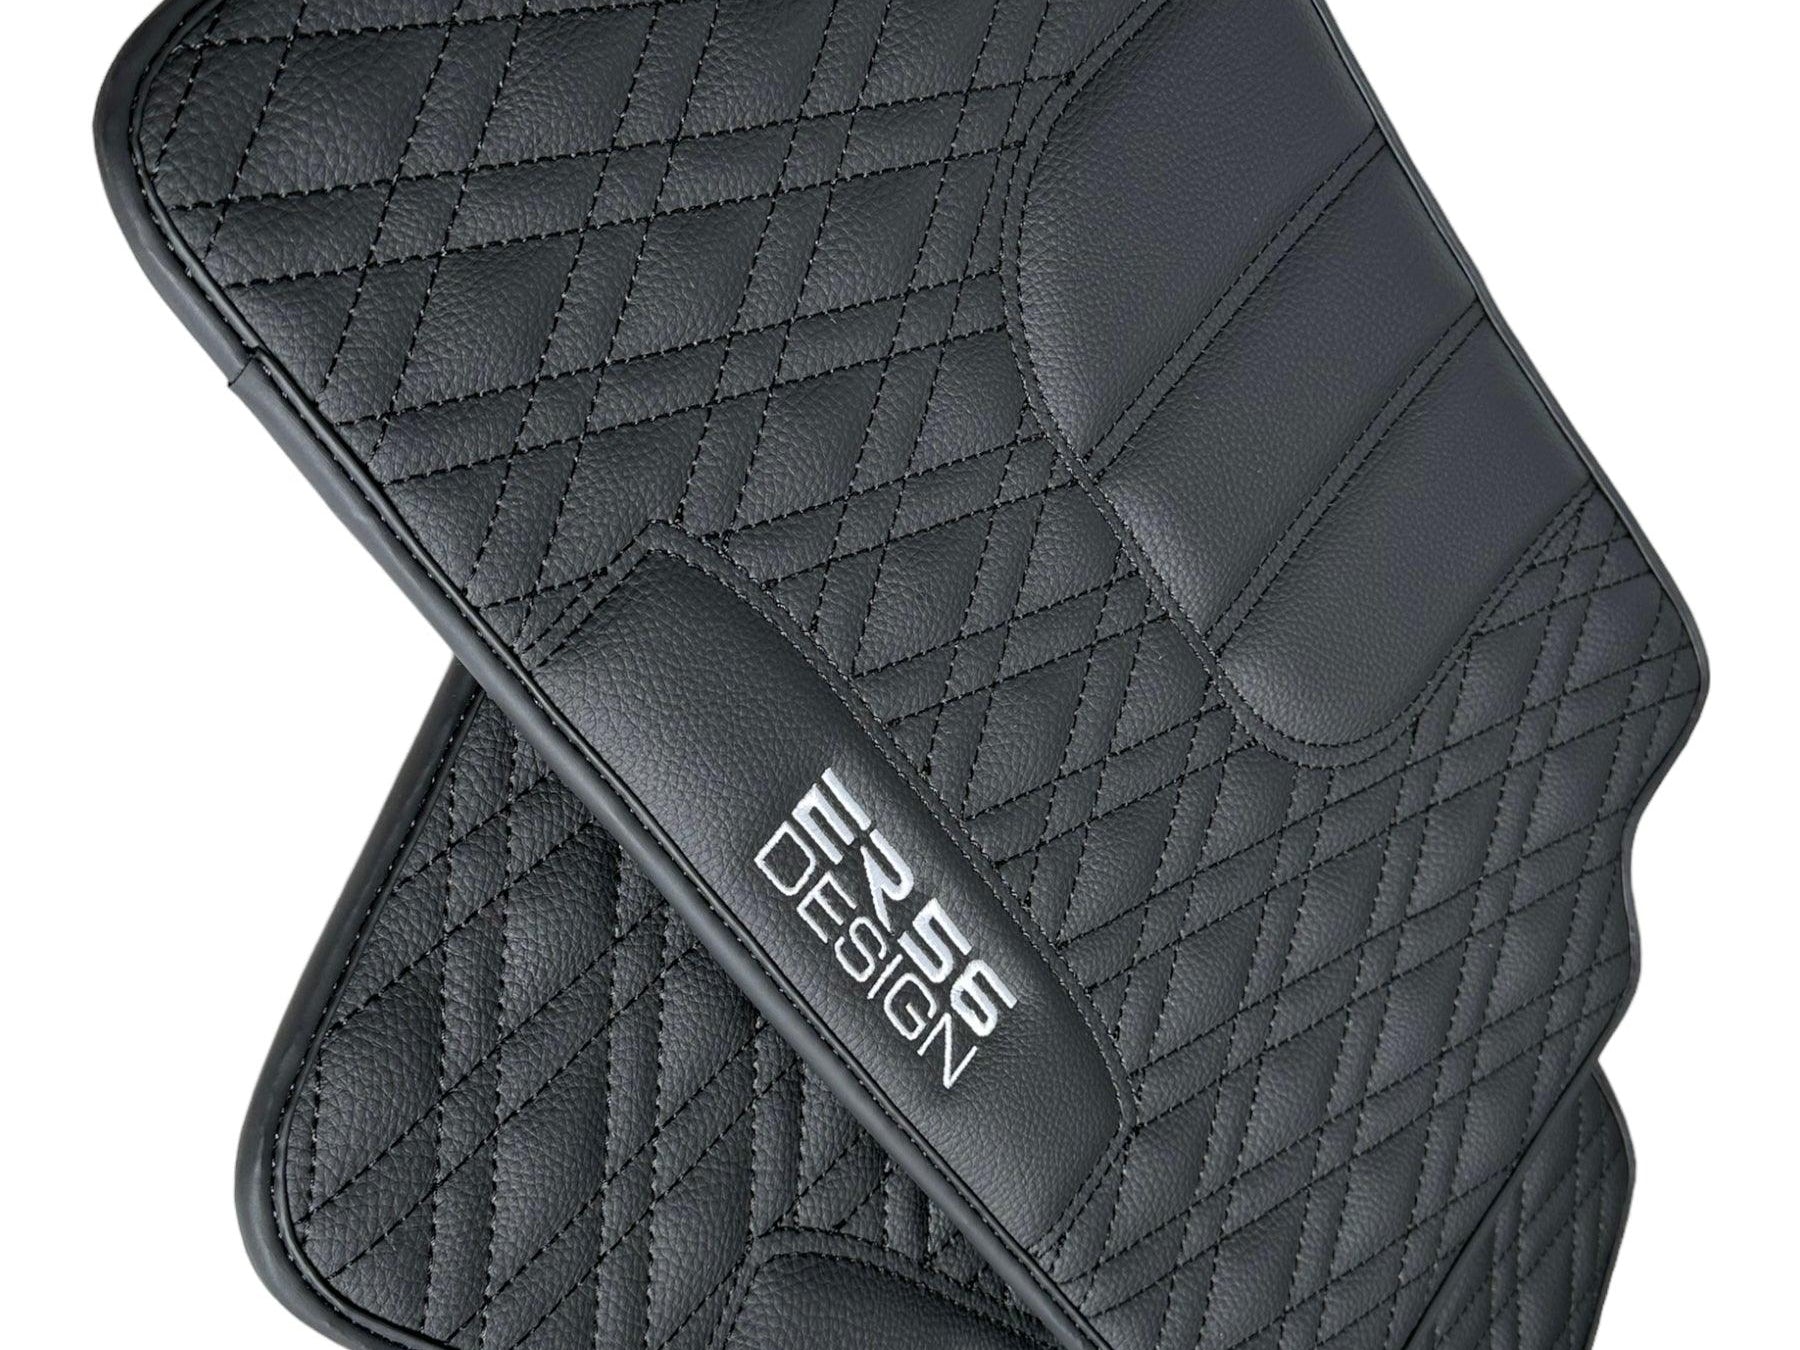 Floor Mats For BMW 3 Series E36 2-door Coupe Black Leather Er56 Design - AutoWin